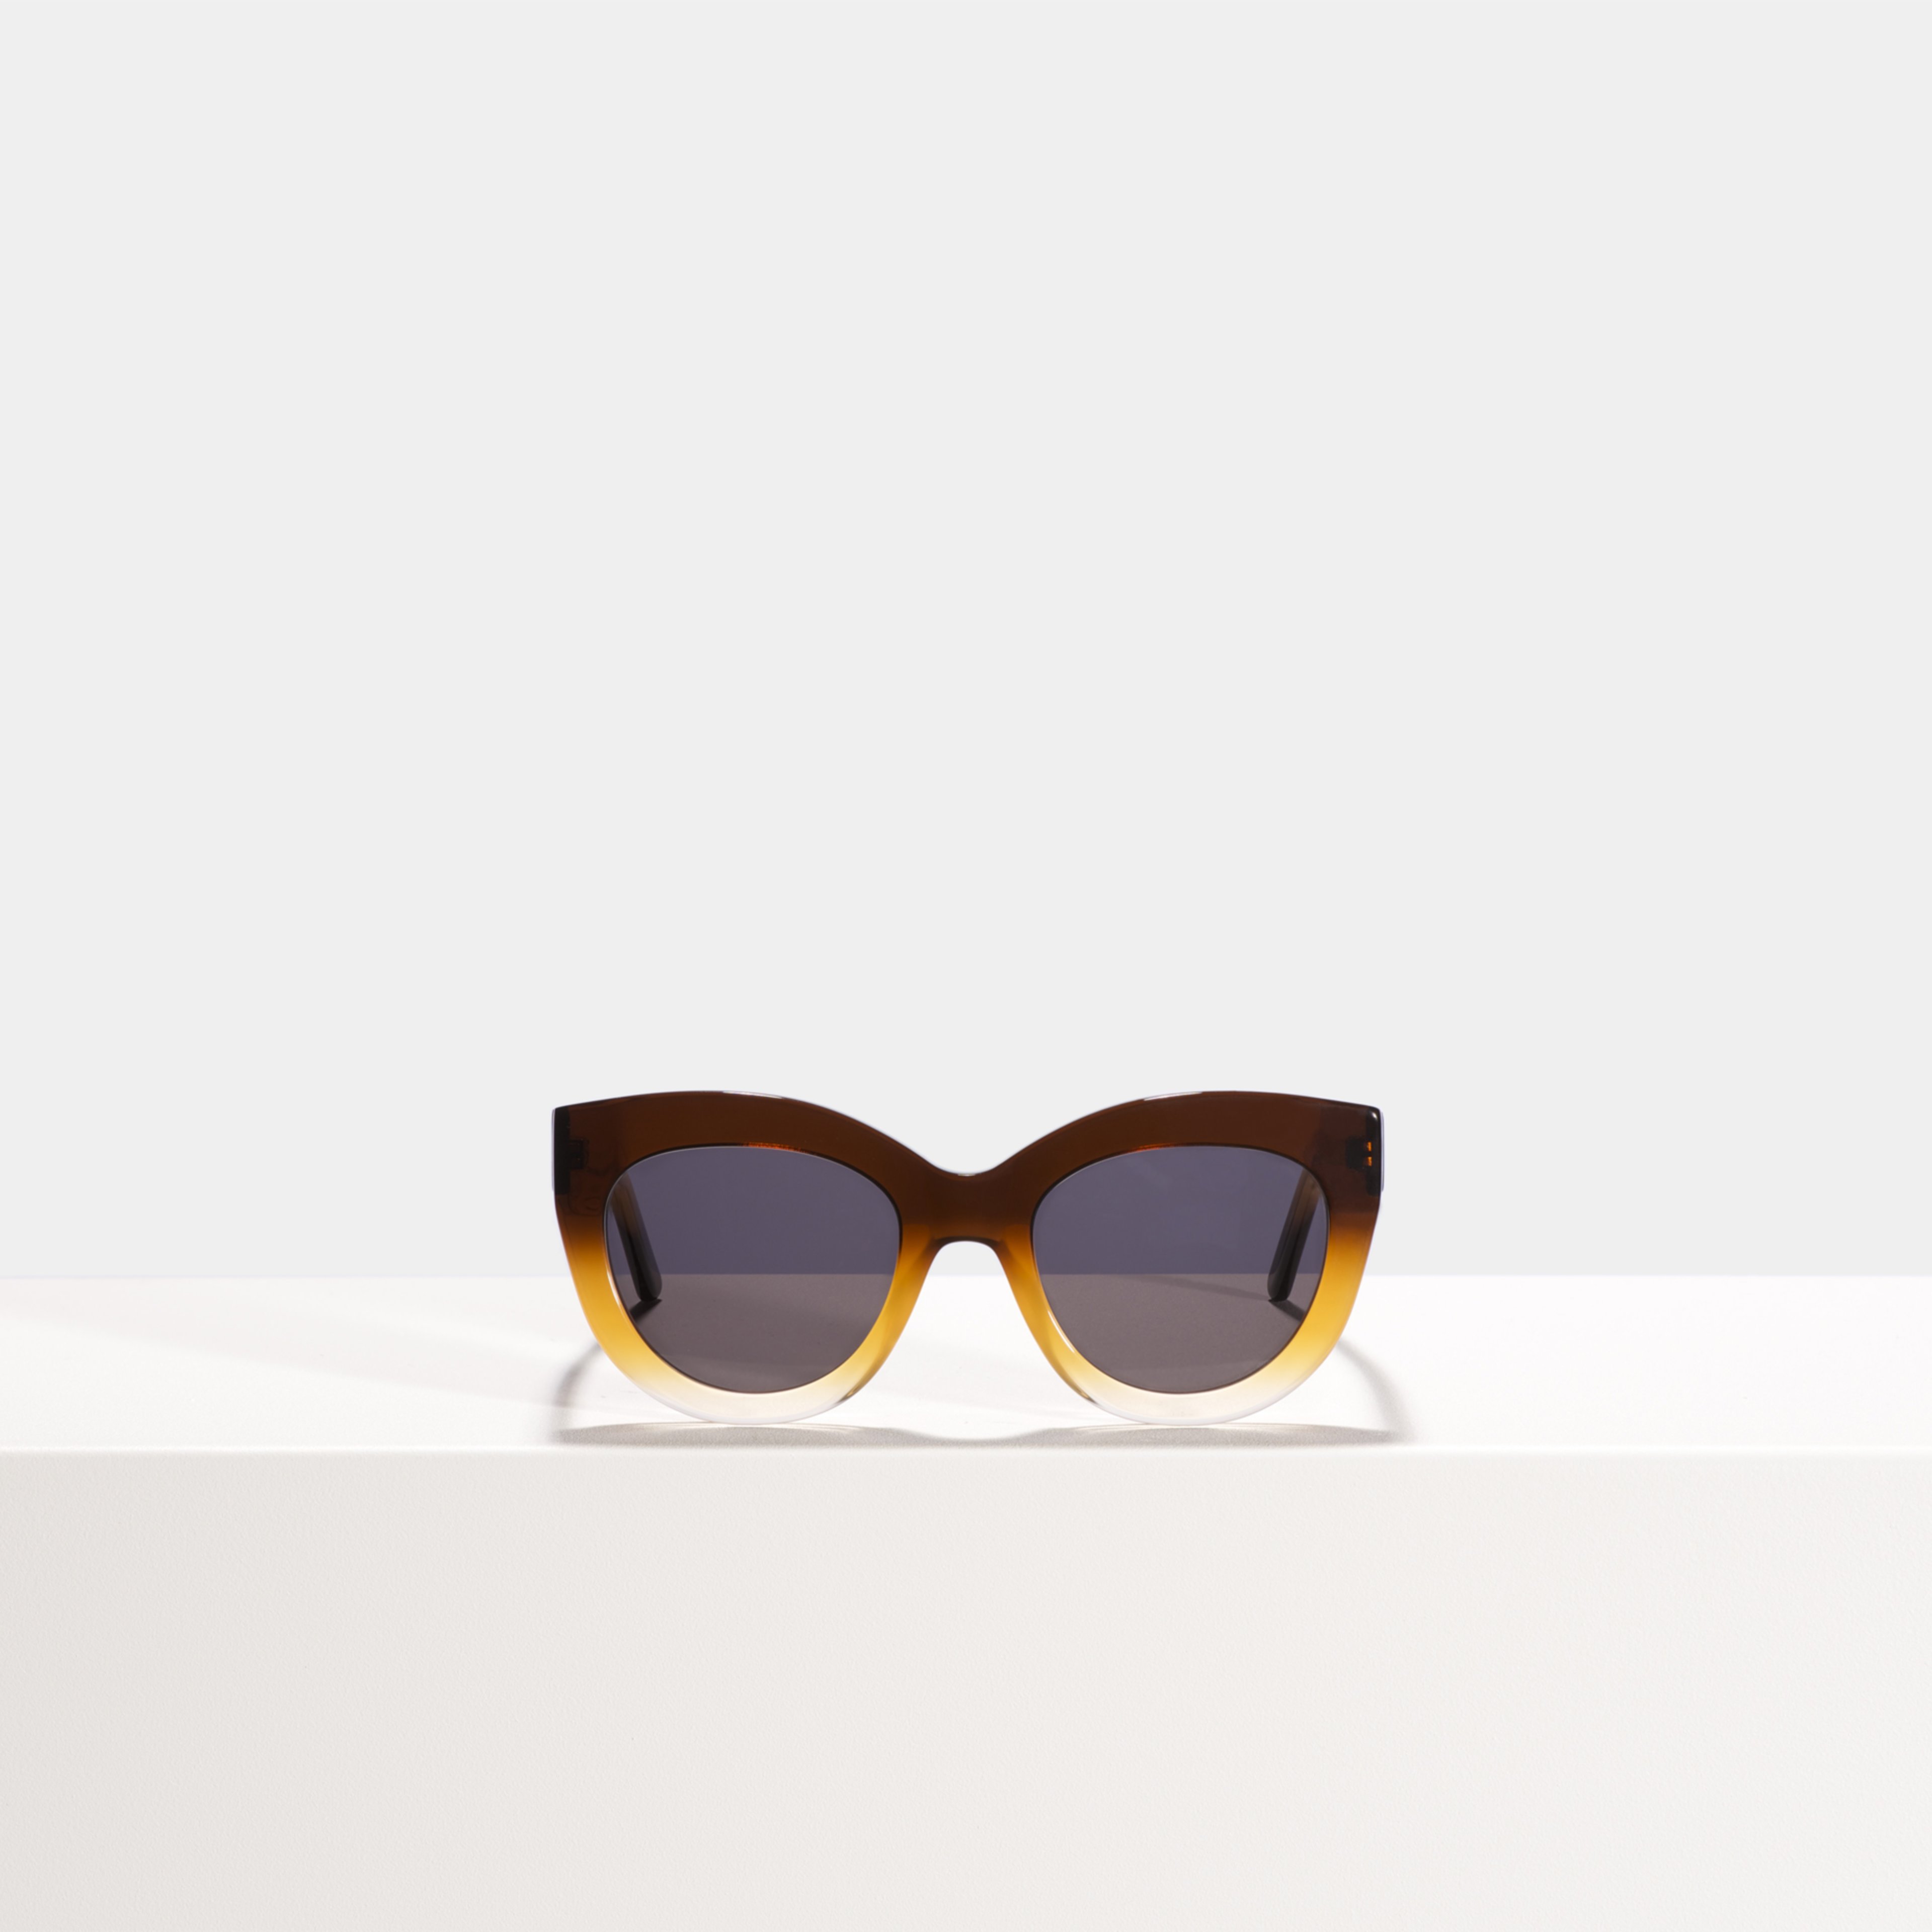 Ace & Tate Sunglasses |  Acetate in Brown, Orange